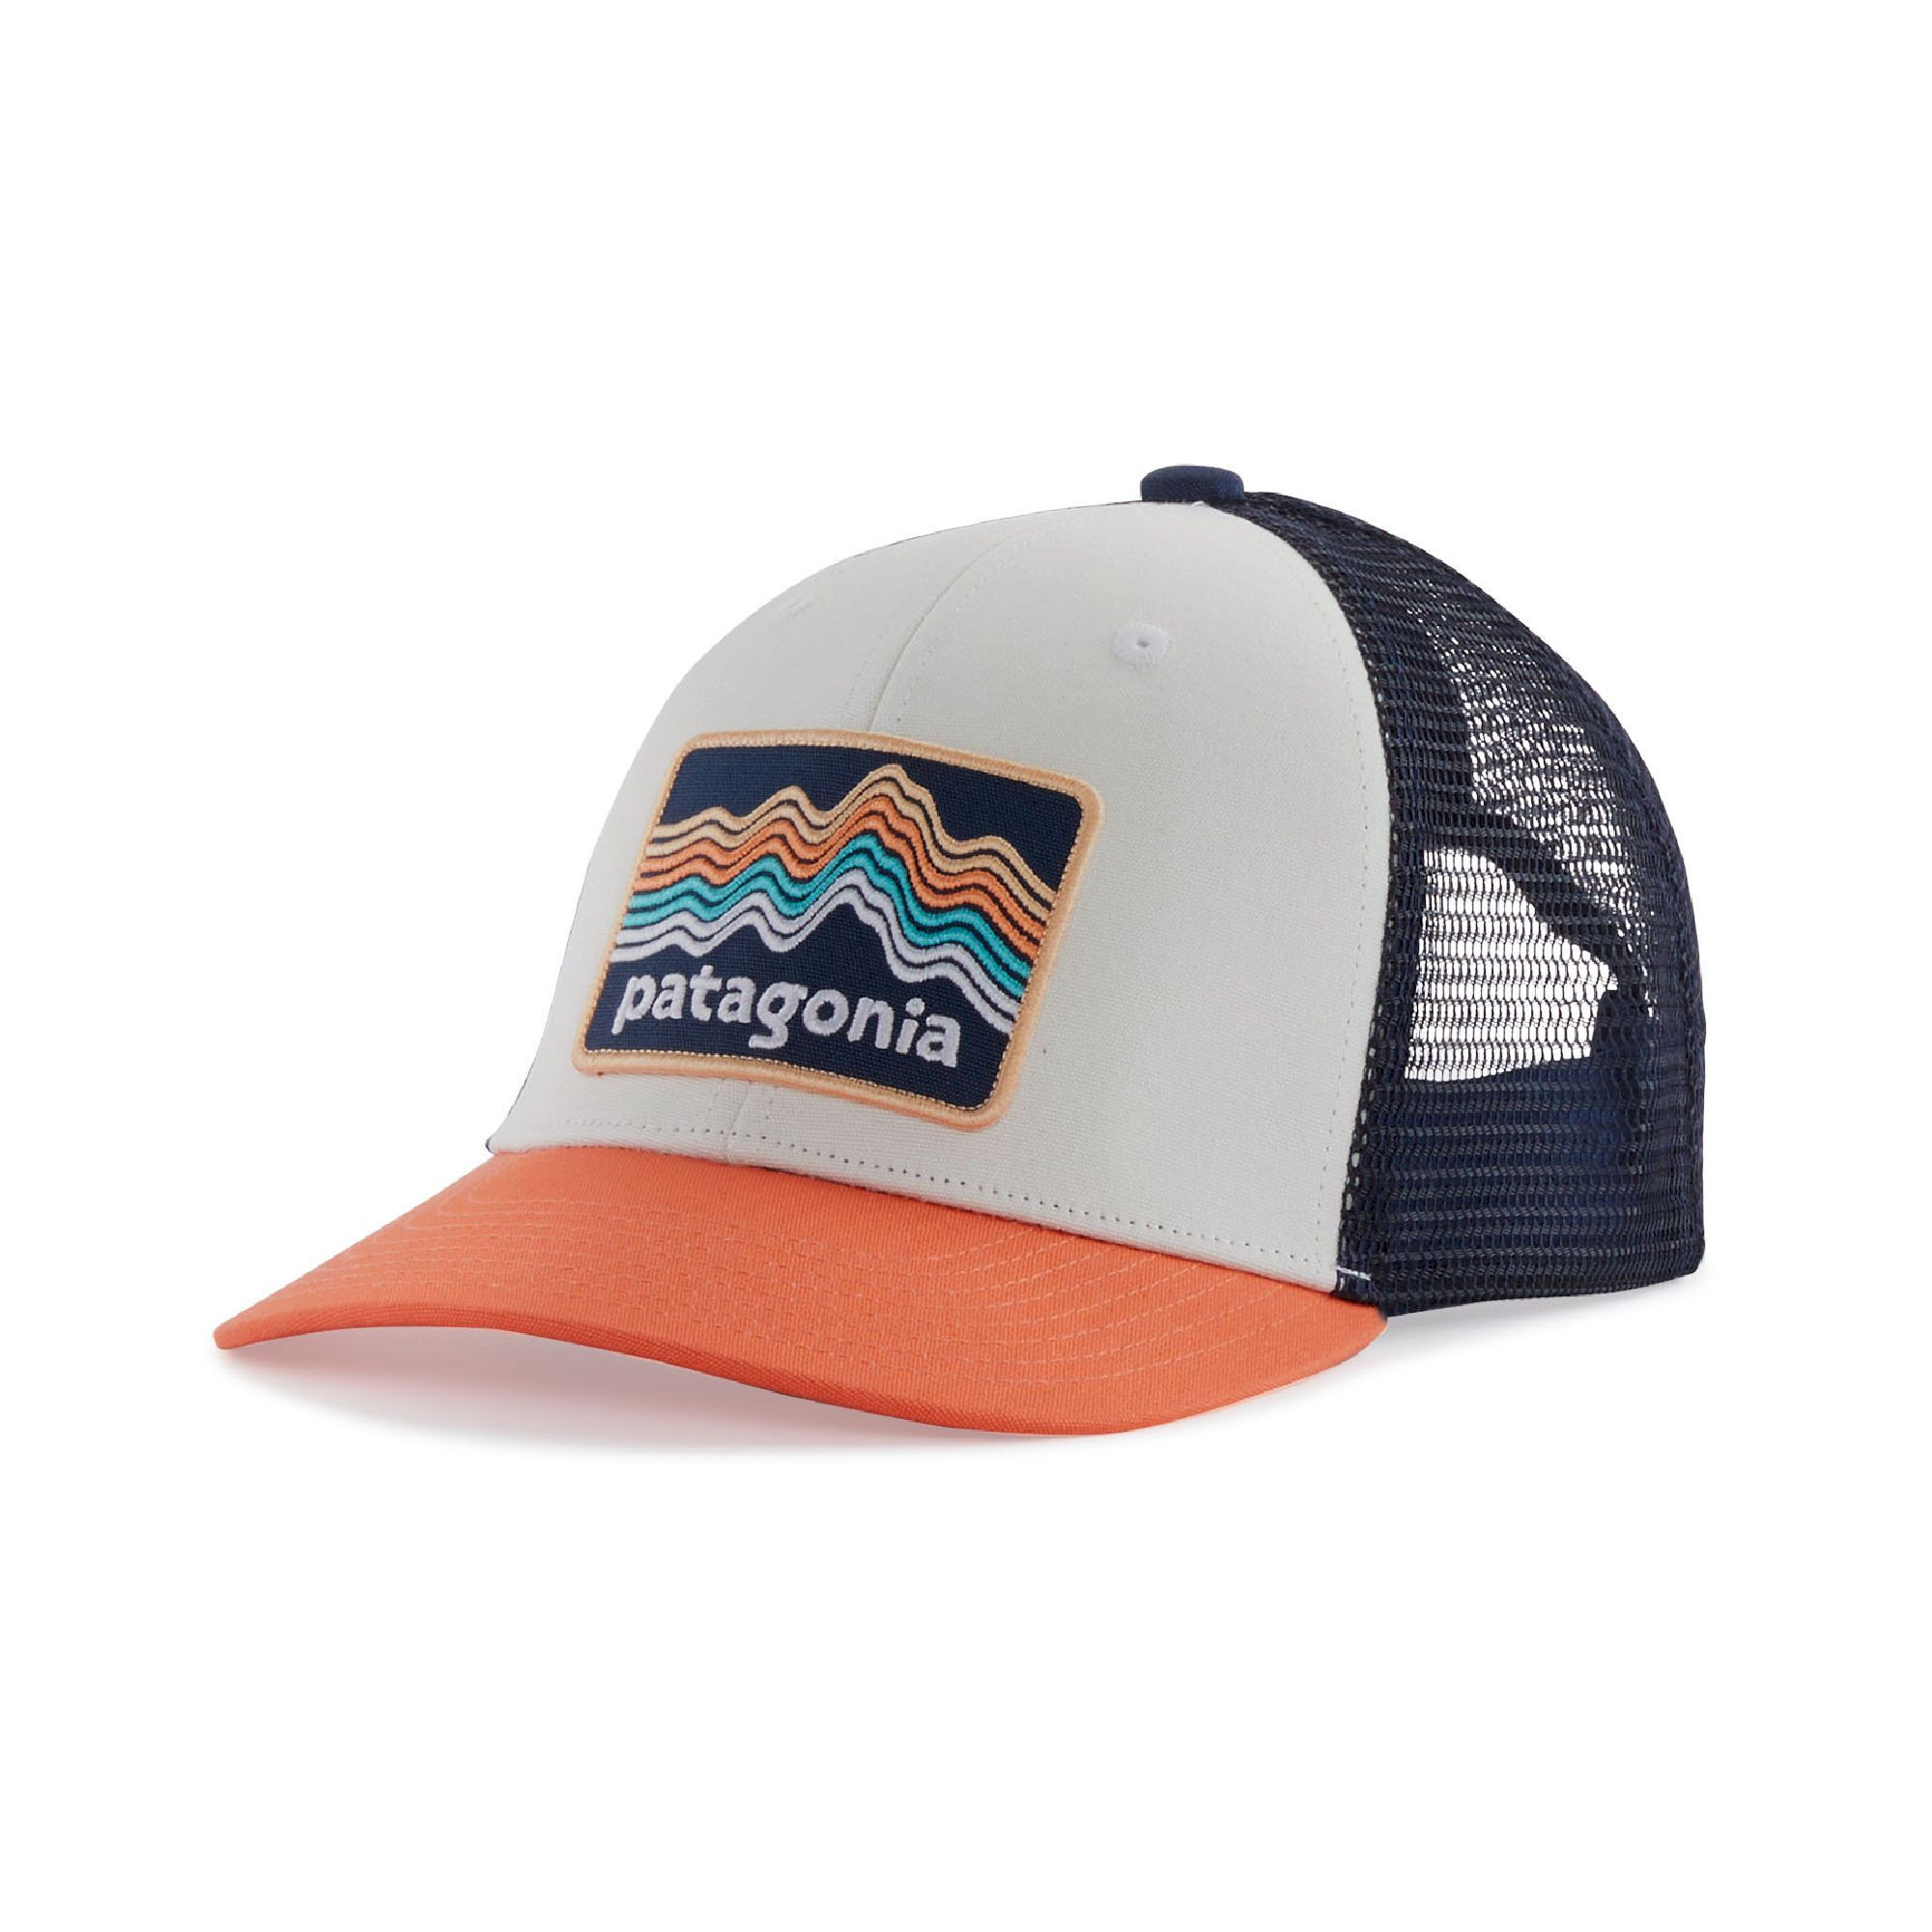 Patagonia K's Trucker Hat - Cap